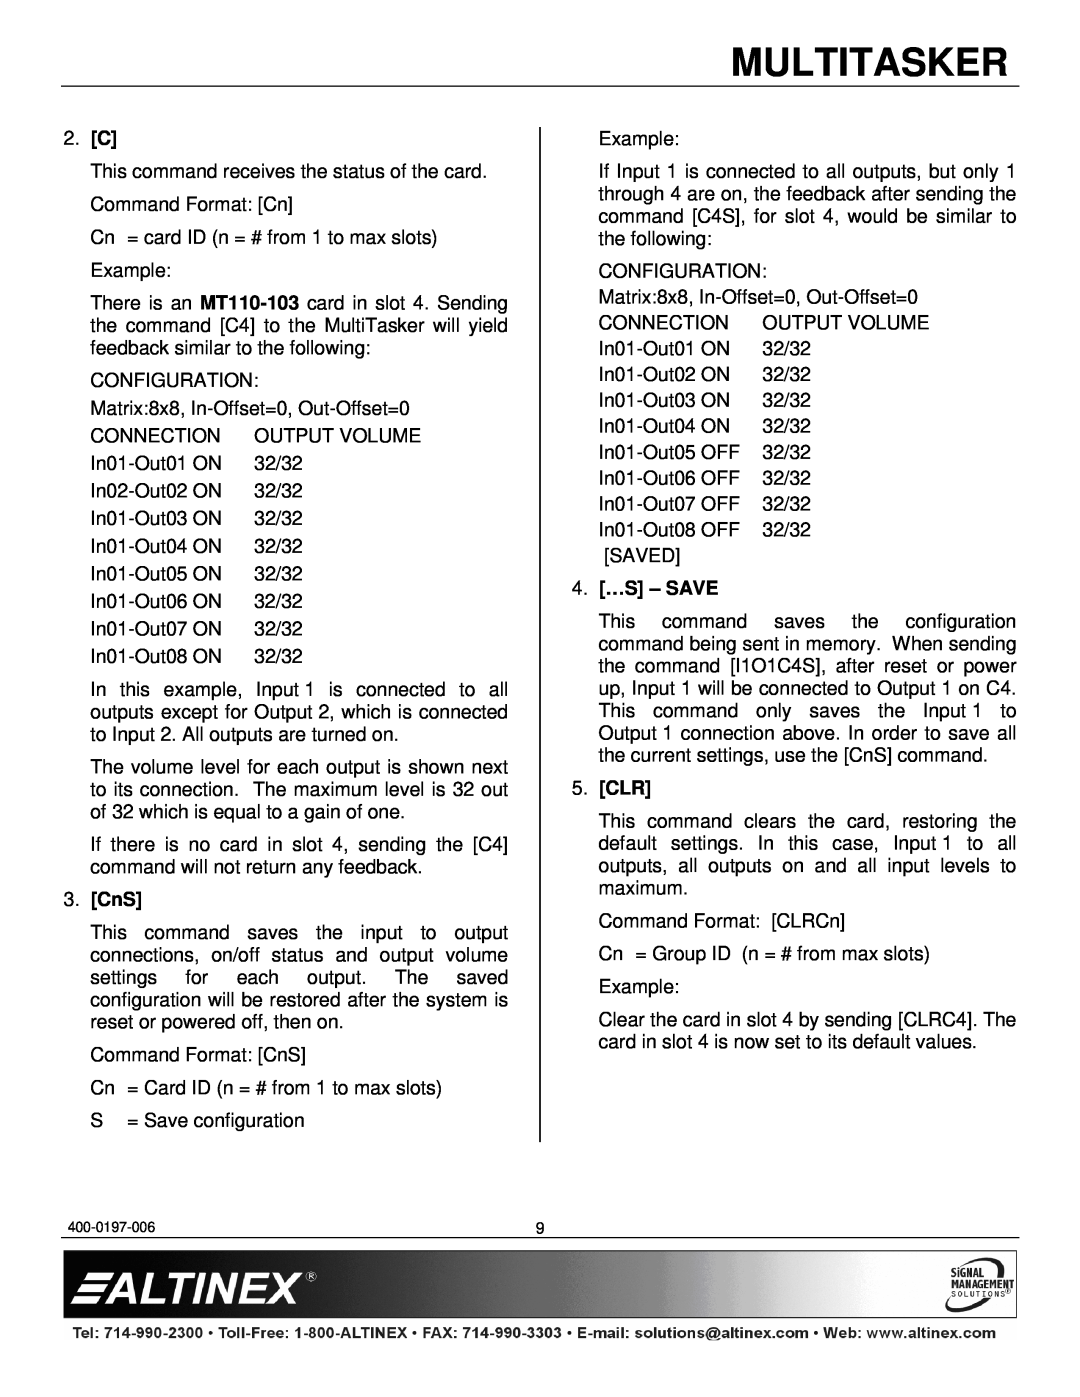 Altinex MT110-103 manual 2. C, CnS, 4. …S - SAVE, Clr, Multitasker 